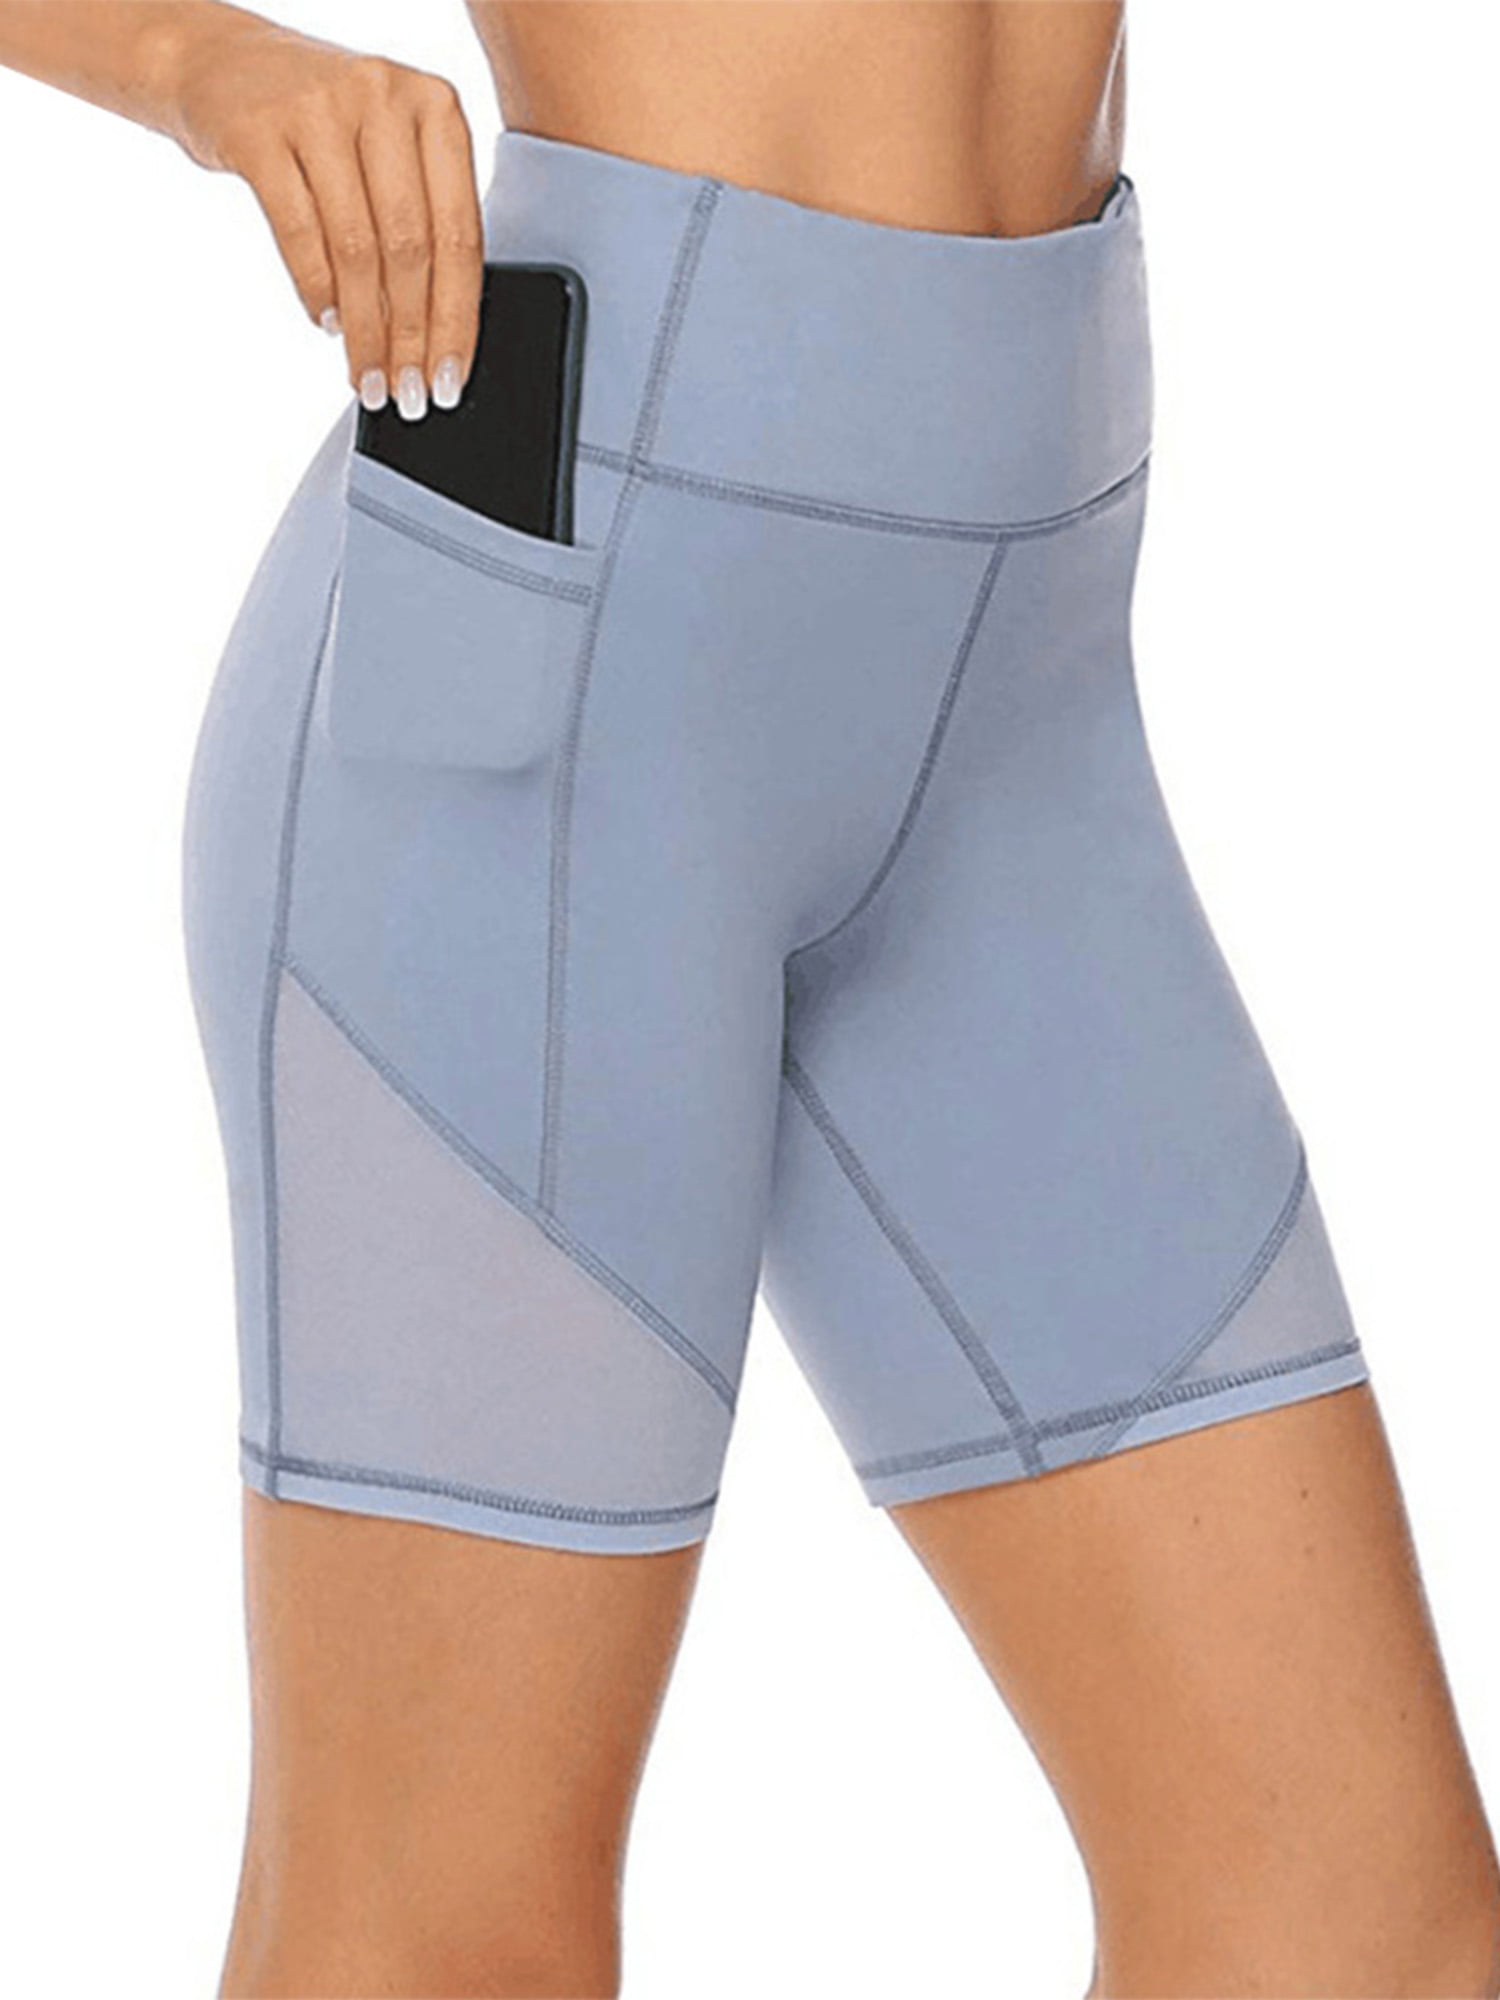 Daeful Ladies Yoga Shorts Striped Workout Sport Short Pants High Waist ...